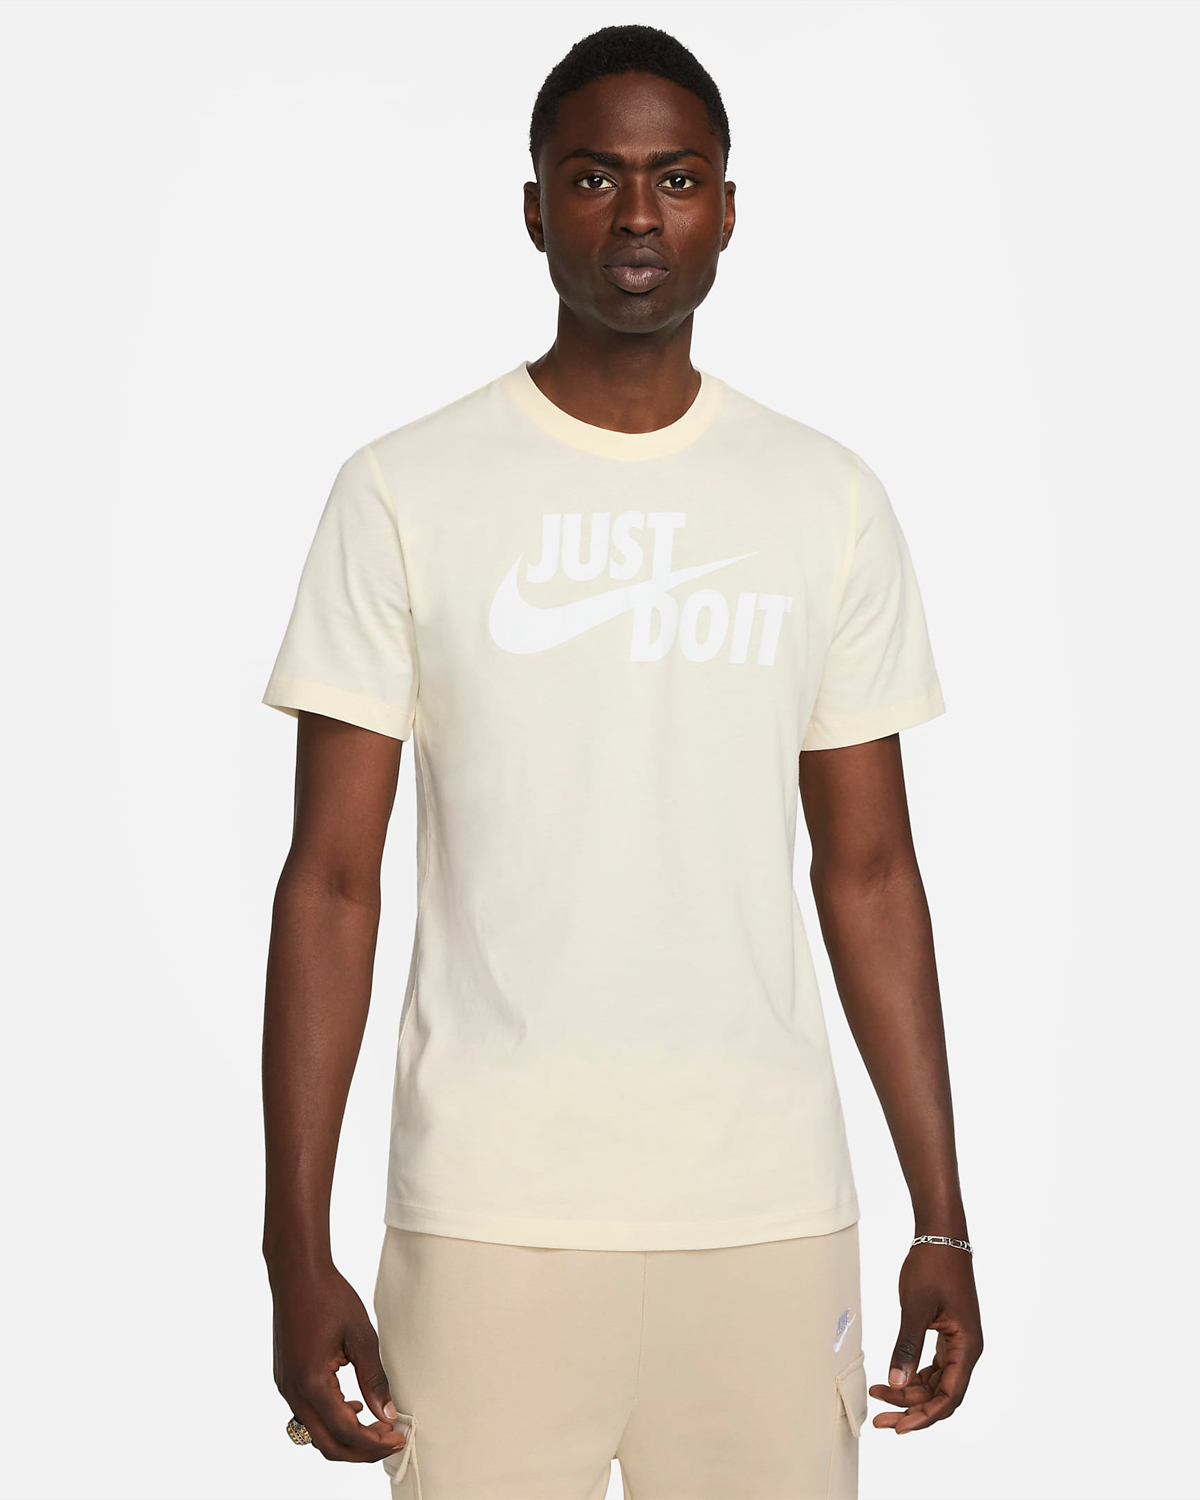 Nike-Sportswear-JDI-T-Shirt-Coconut-Milk